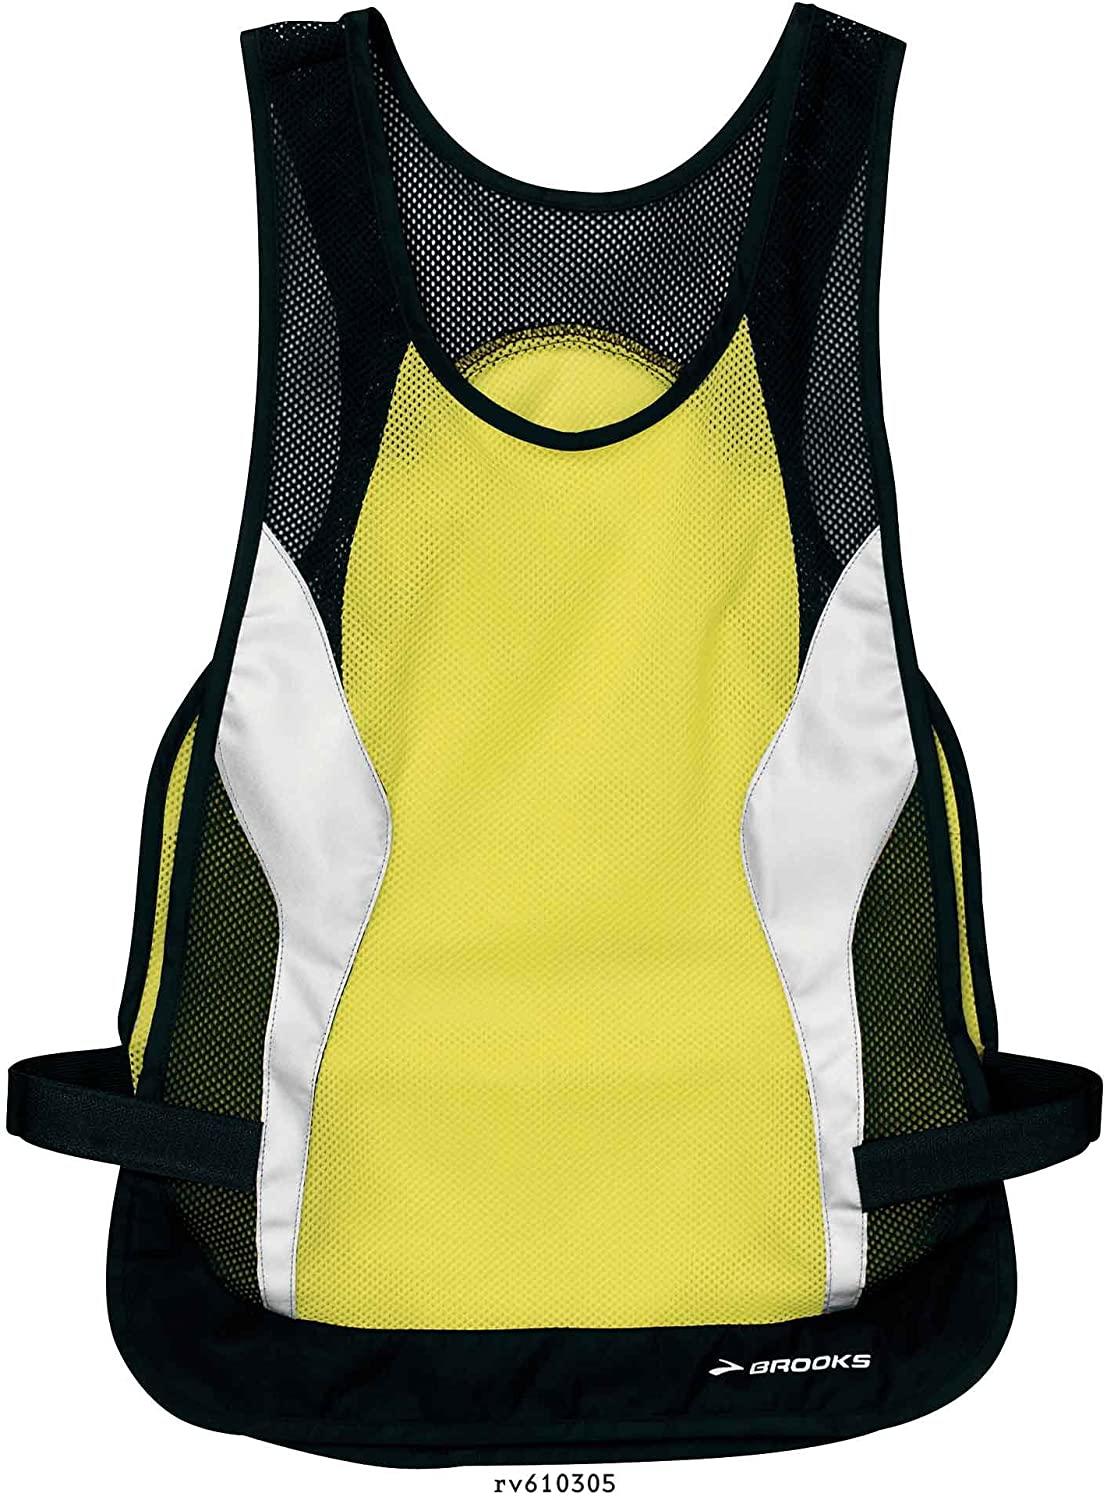 Brand New hi viz reflective cycling/running safety vest,uk seller and uk stock. 